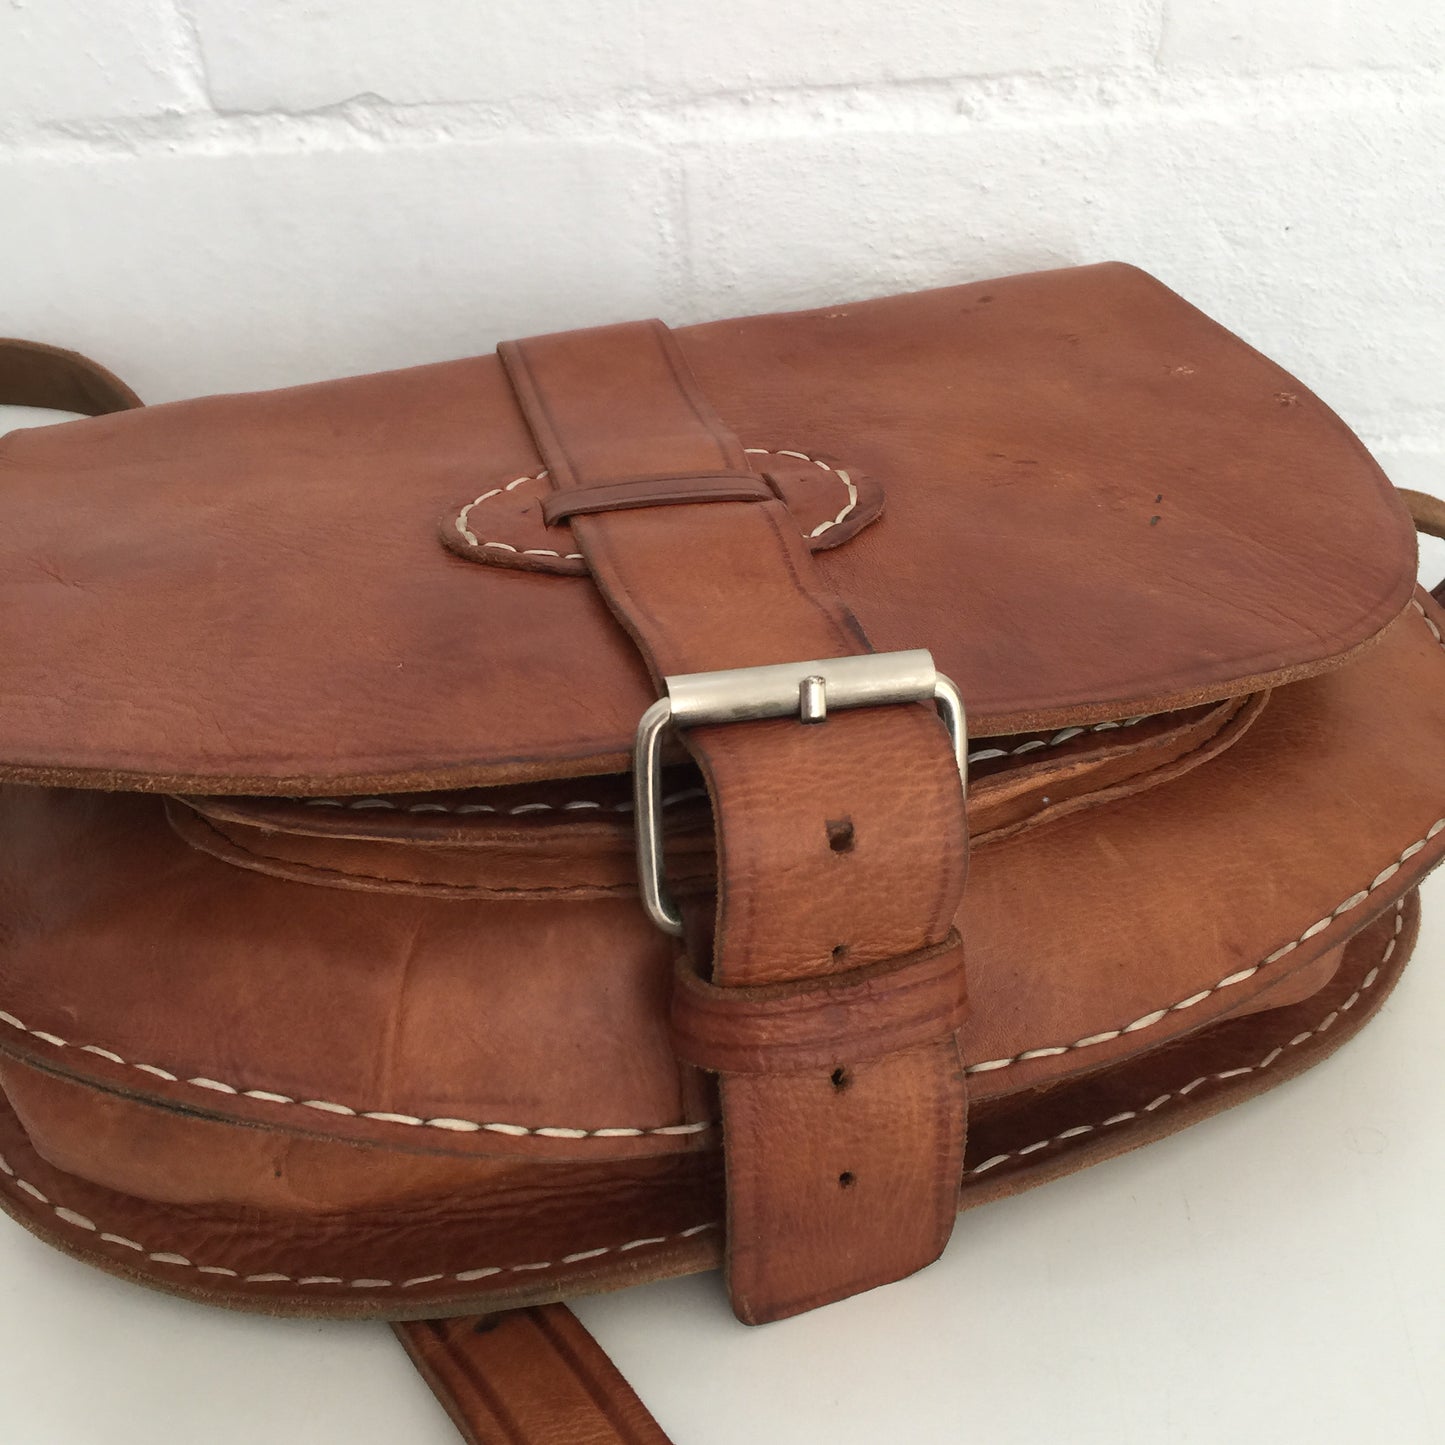 Awesome Genuine LEATHER Vintage Handbag RUSTIC Charm Boho